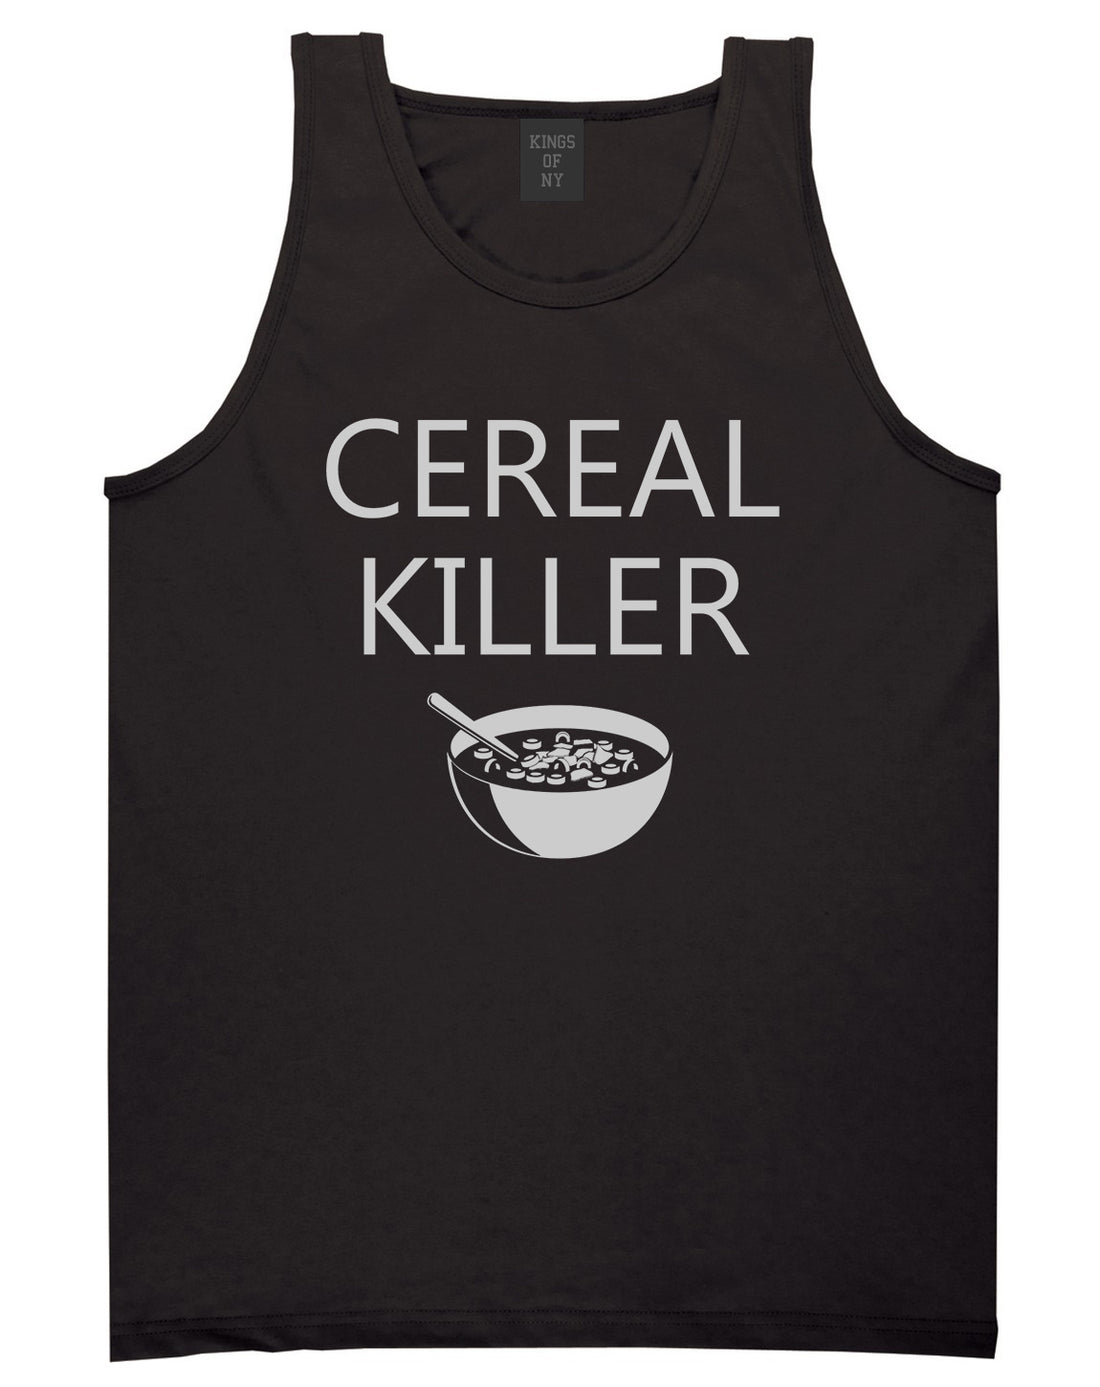 Cereal Killer Funny Halloween Mens Tank Top T-Shirt Black